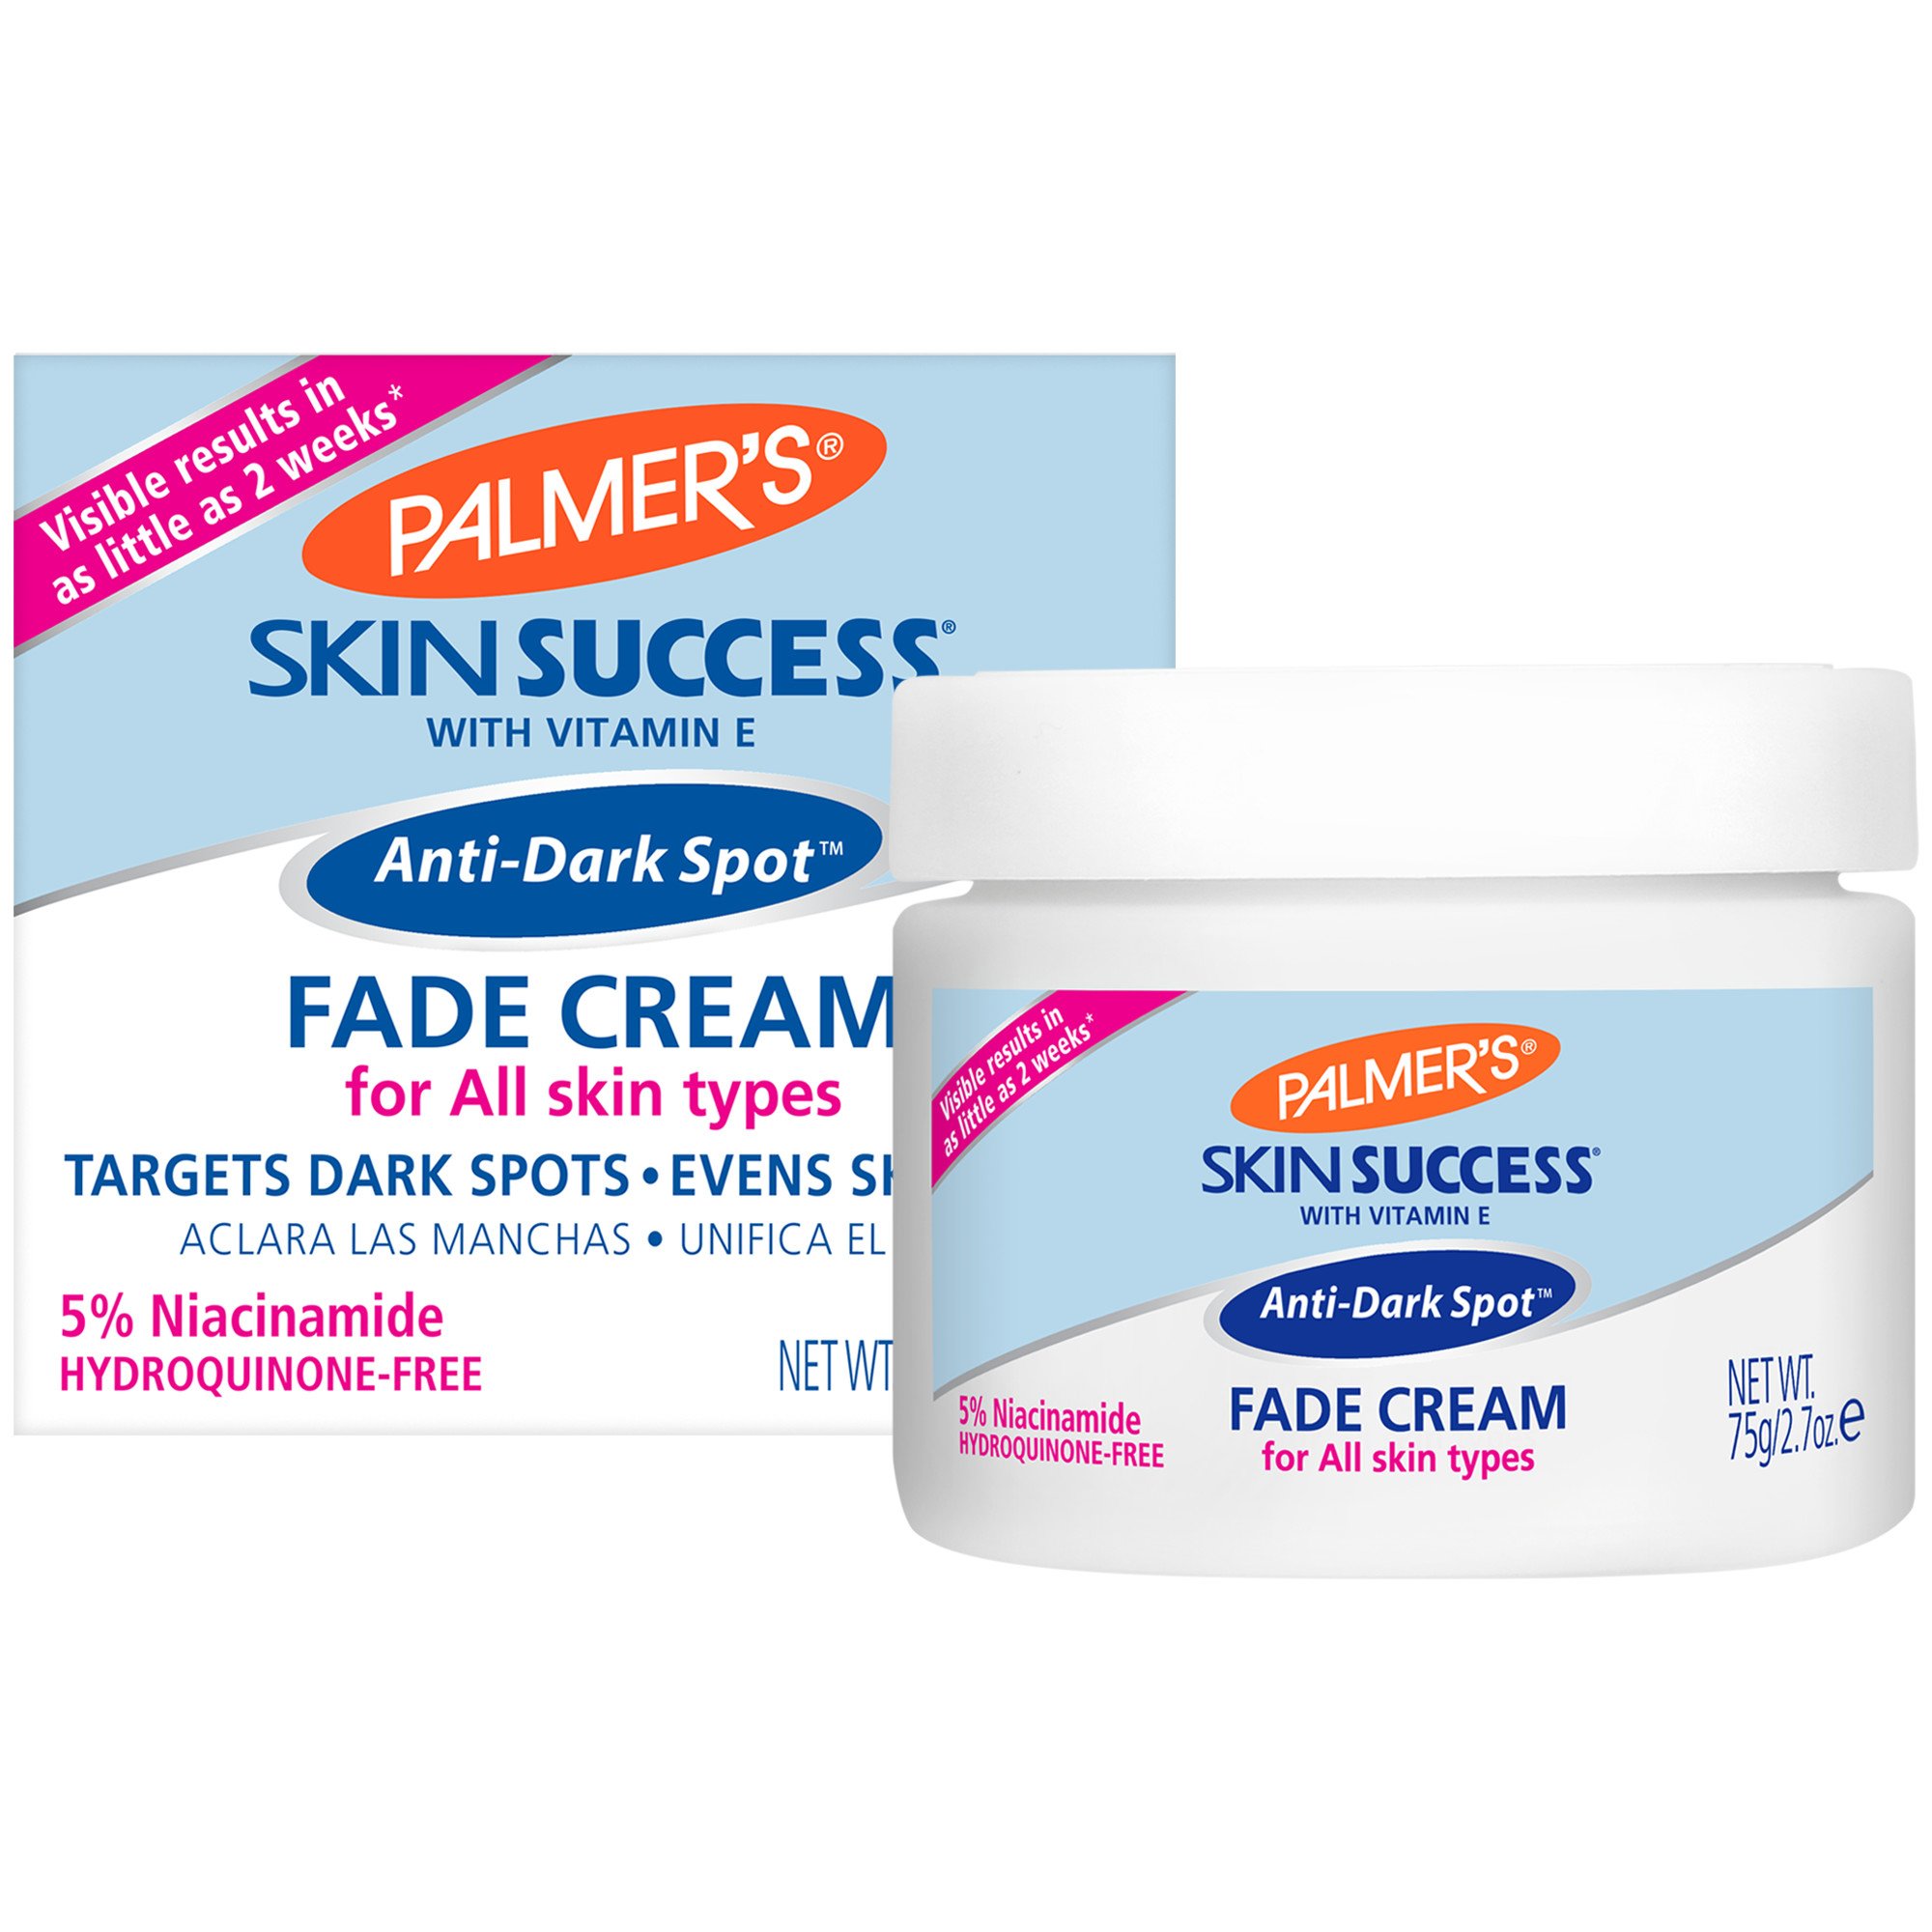 Palmer's Skin Success Anti-Dark Spot Fade Cream for All Skin Types, 2.7 oz. - image 1 of 13